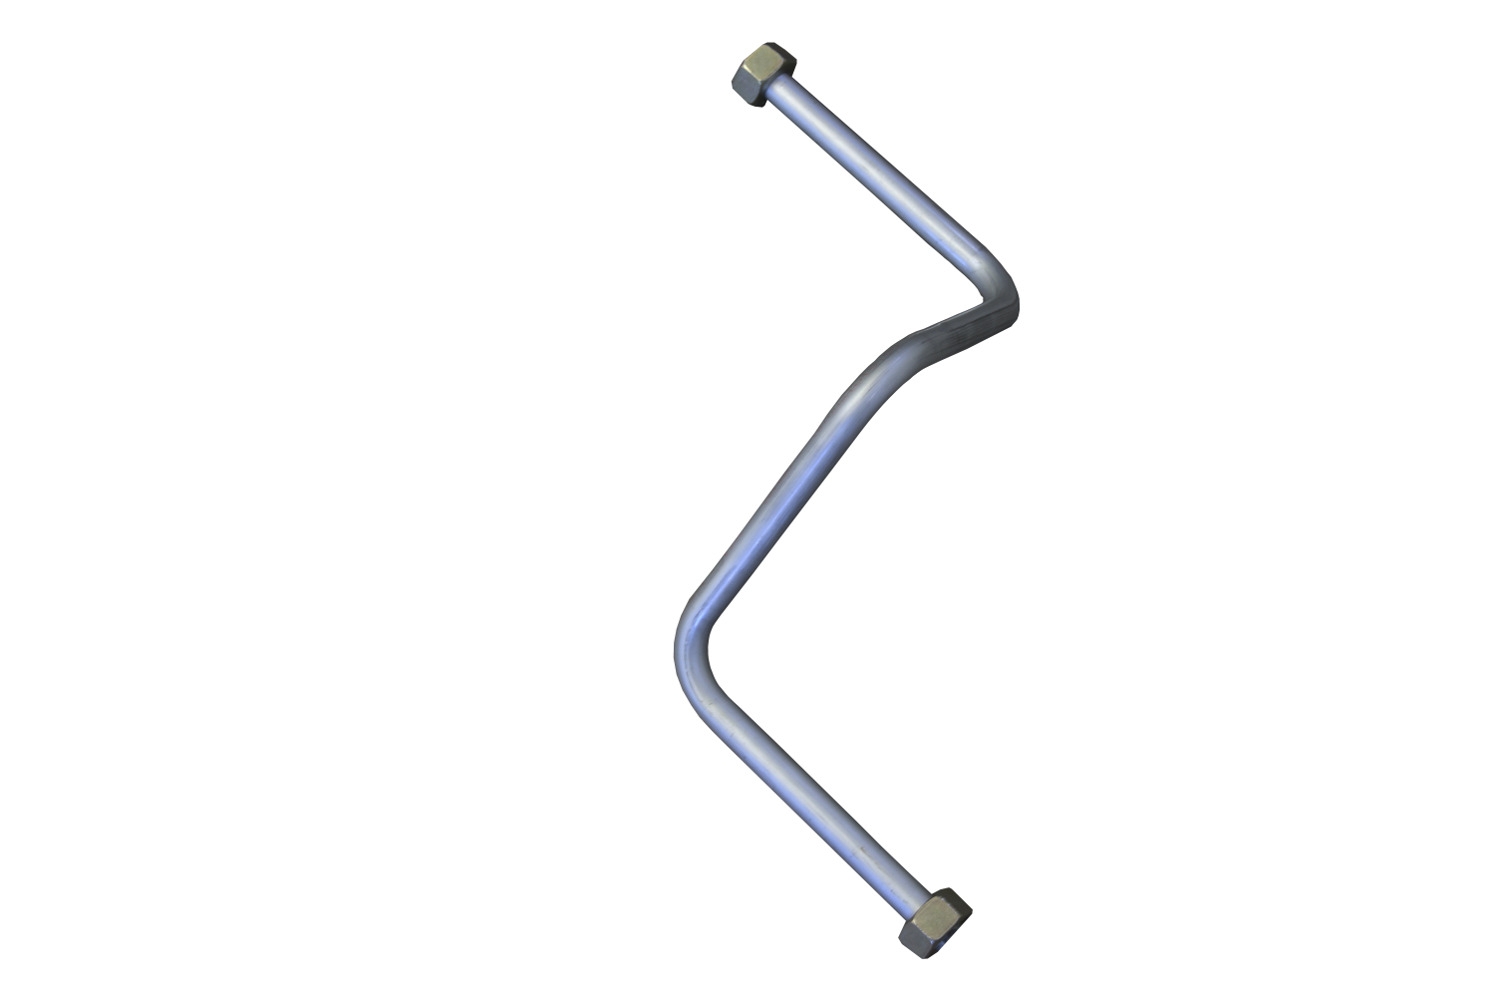 Bent hydraulic tube